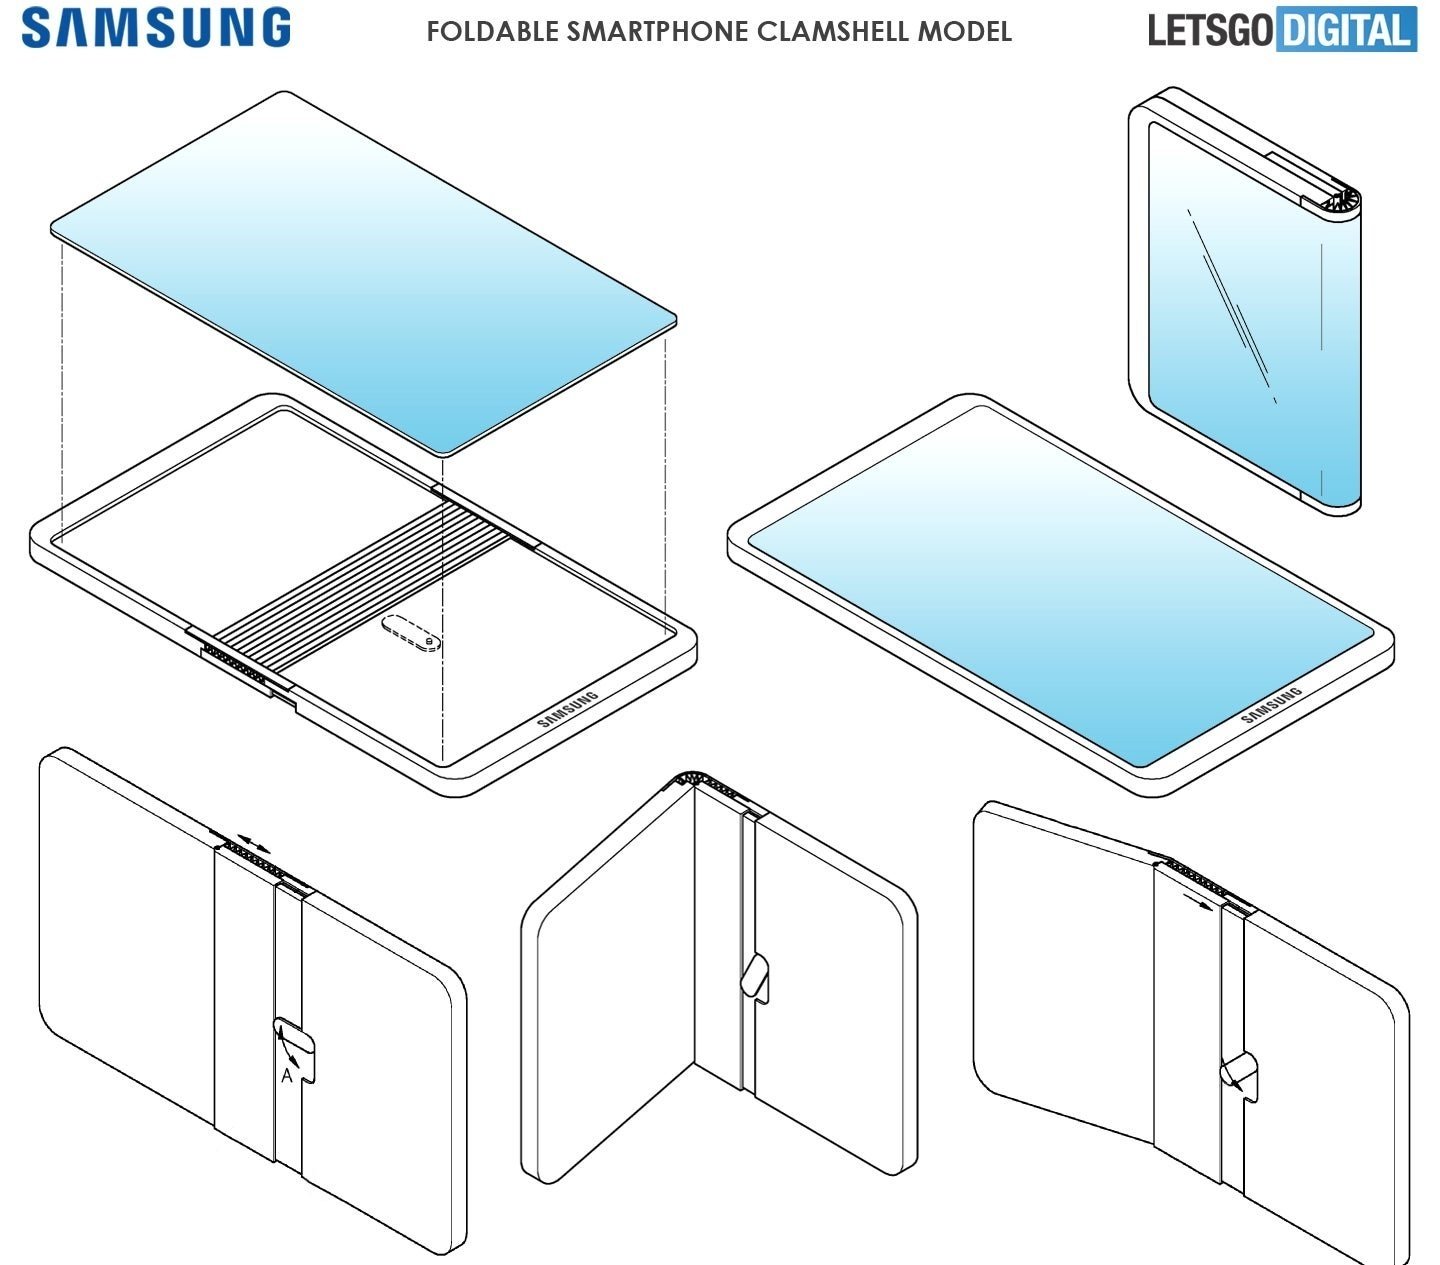 Samsung patente plegable